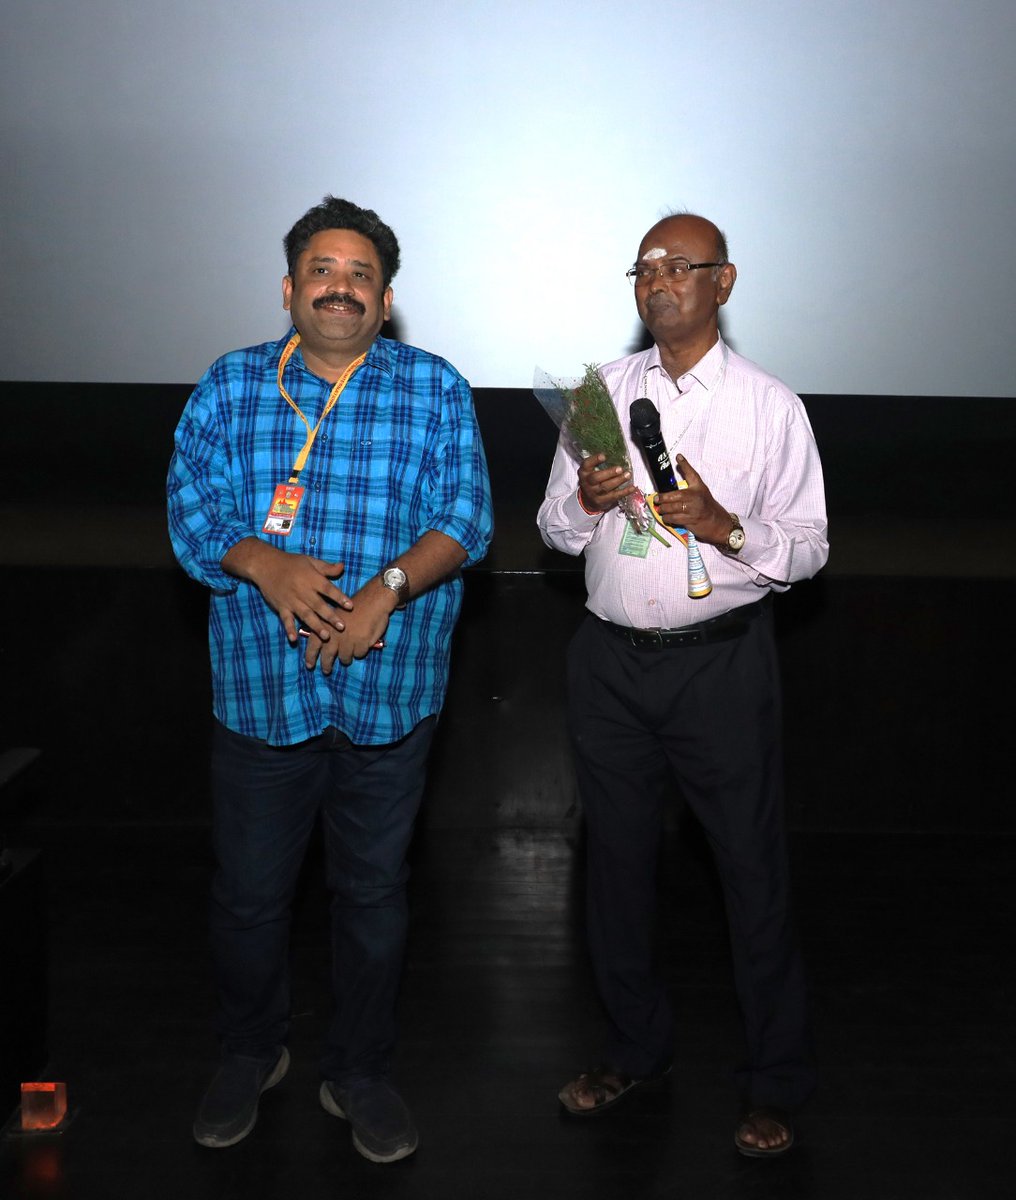 National Award Winning Director @seenuramasamy and Lyricist @lyricistkaruna attended the screening of #Maamanithan at #20thChennaiInternationalFilmFestival 

#மாமனிதன் #20thCIFF @icaf_chennai 

@onlynikil